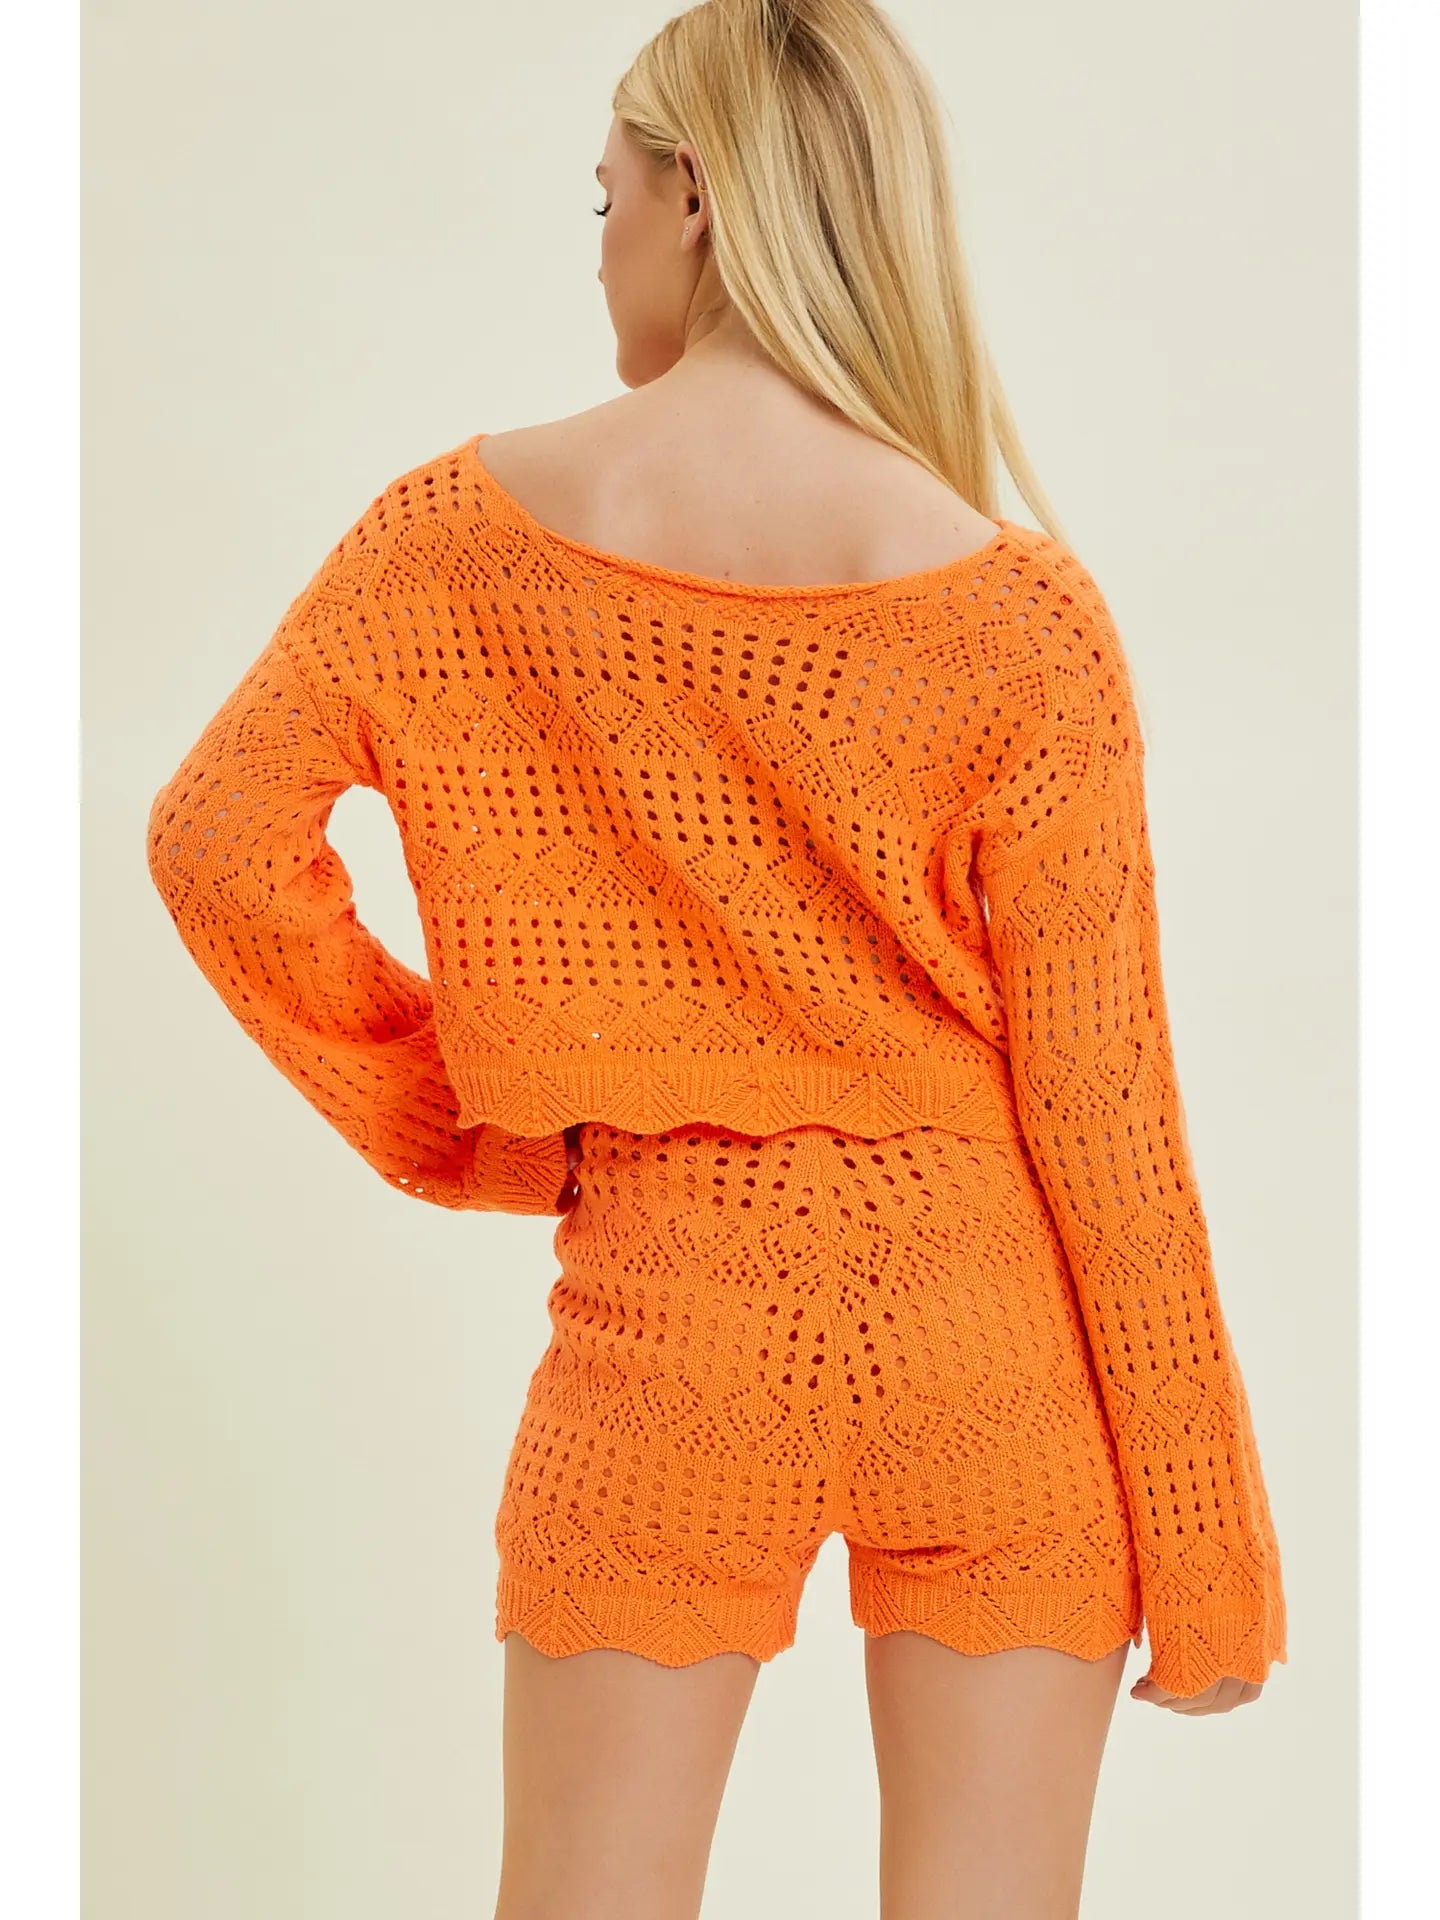 Citrus Textured Yarn Sweater